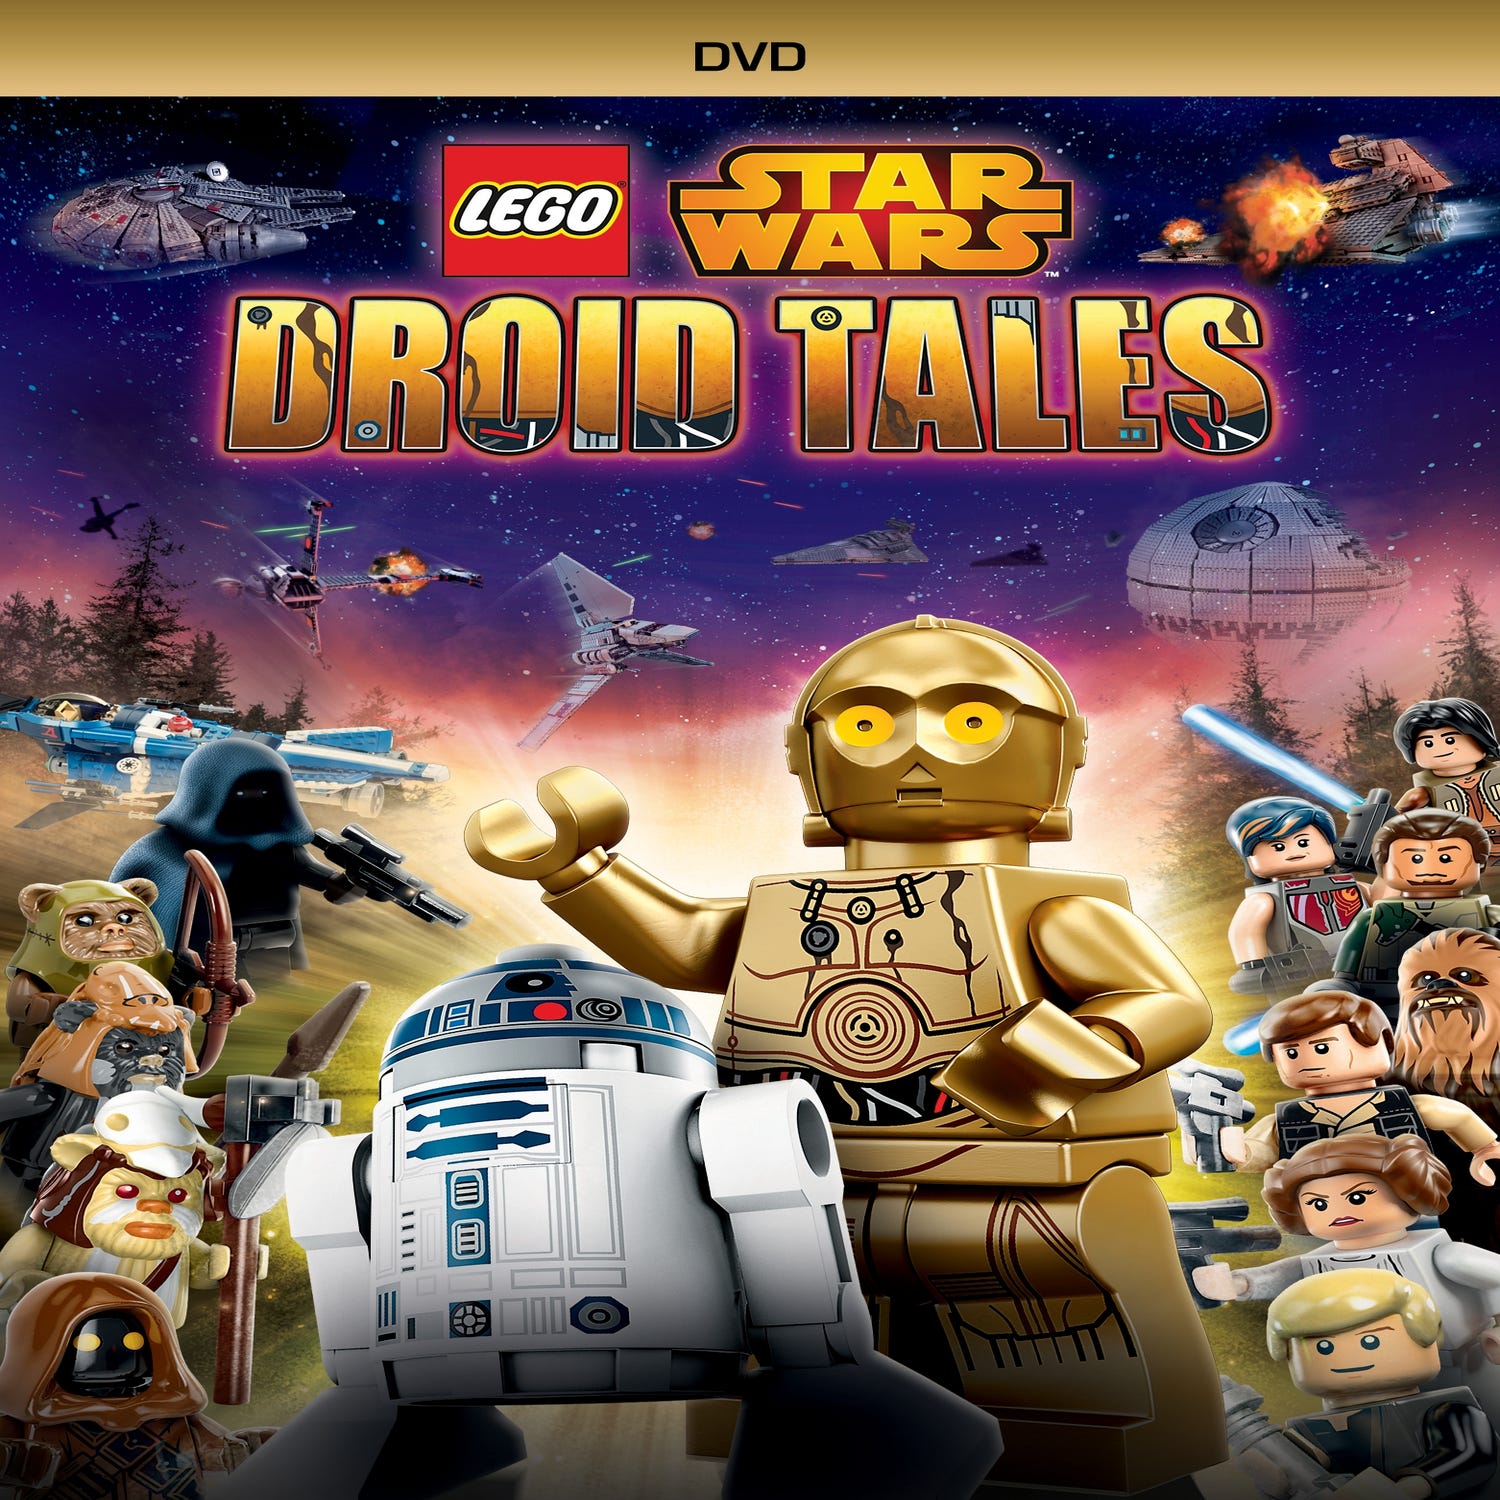 LEGO SW DROID TALES (DVD)